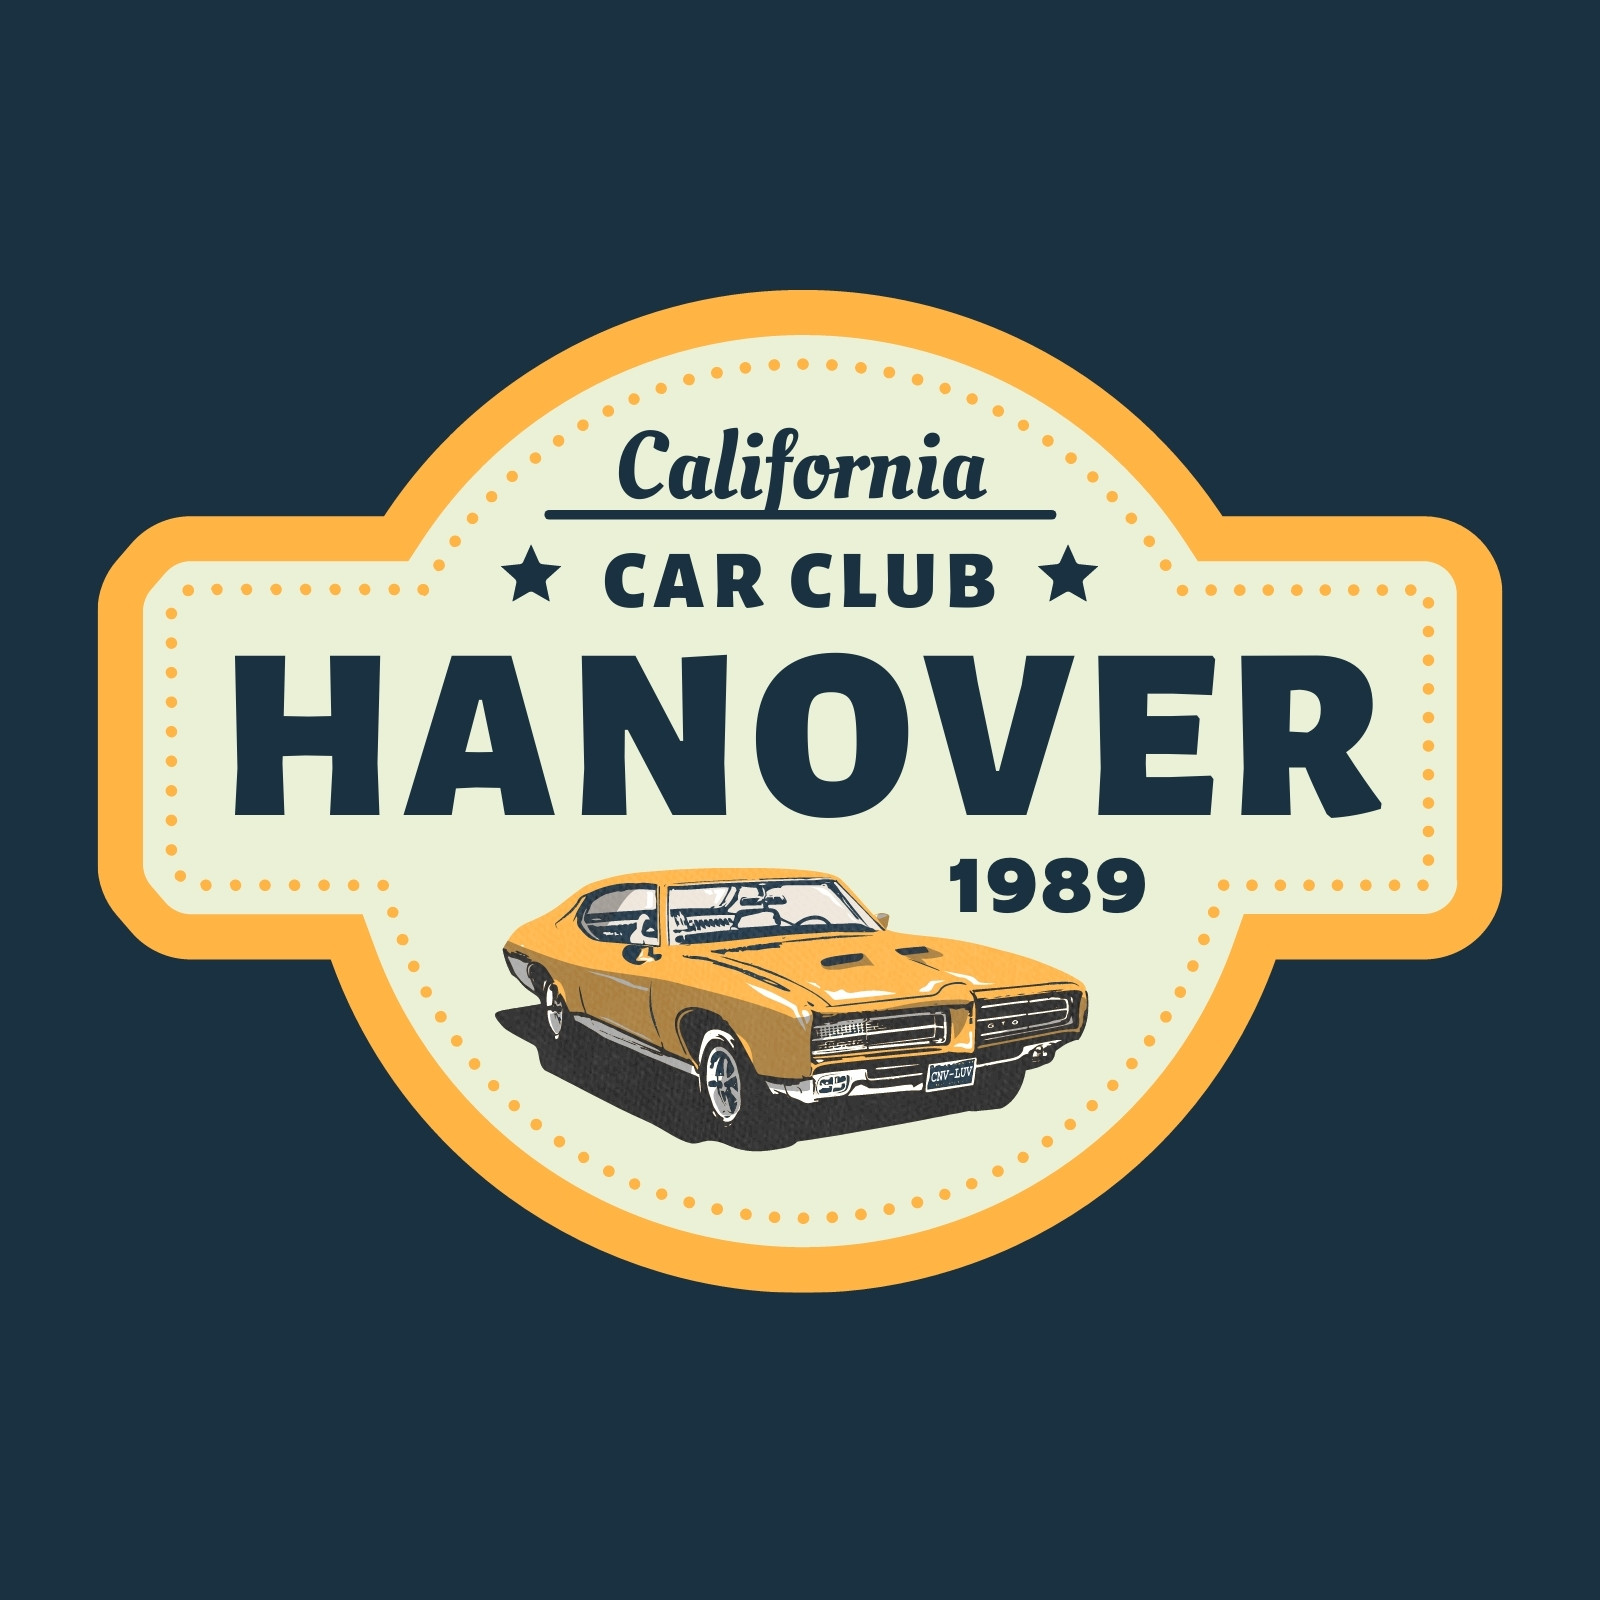 Free printable, customizable automotive logo templates